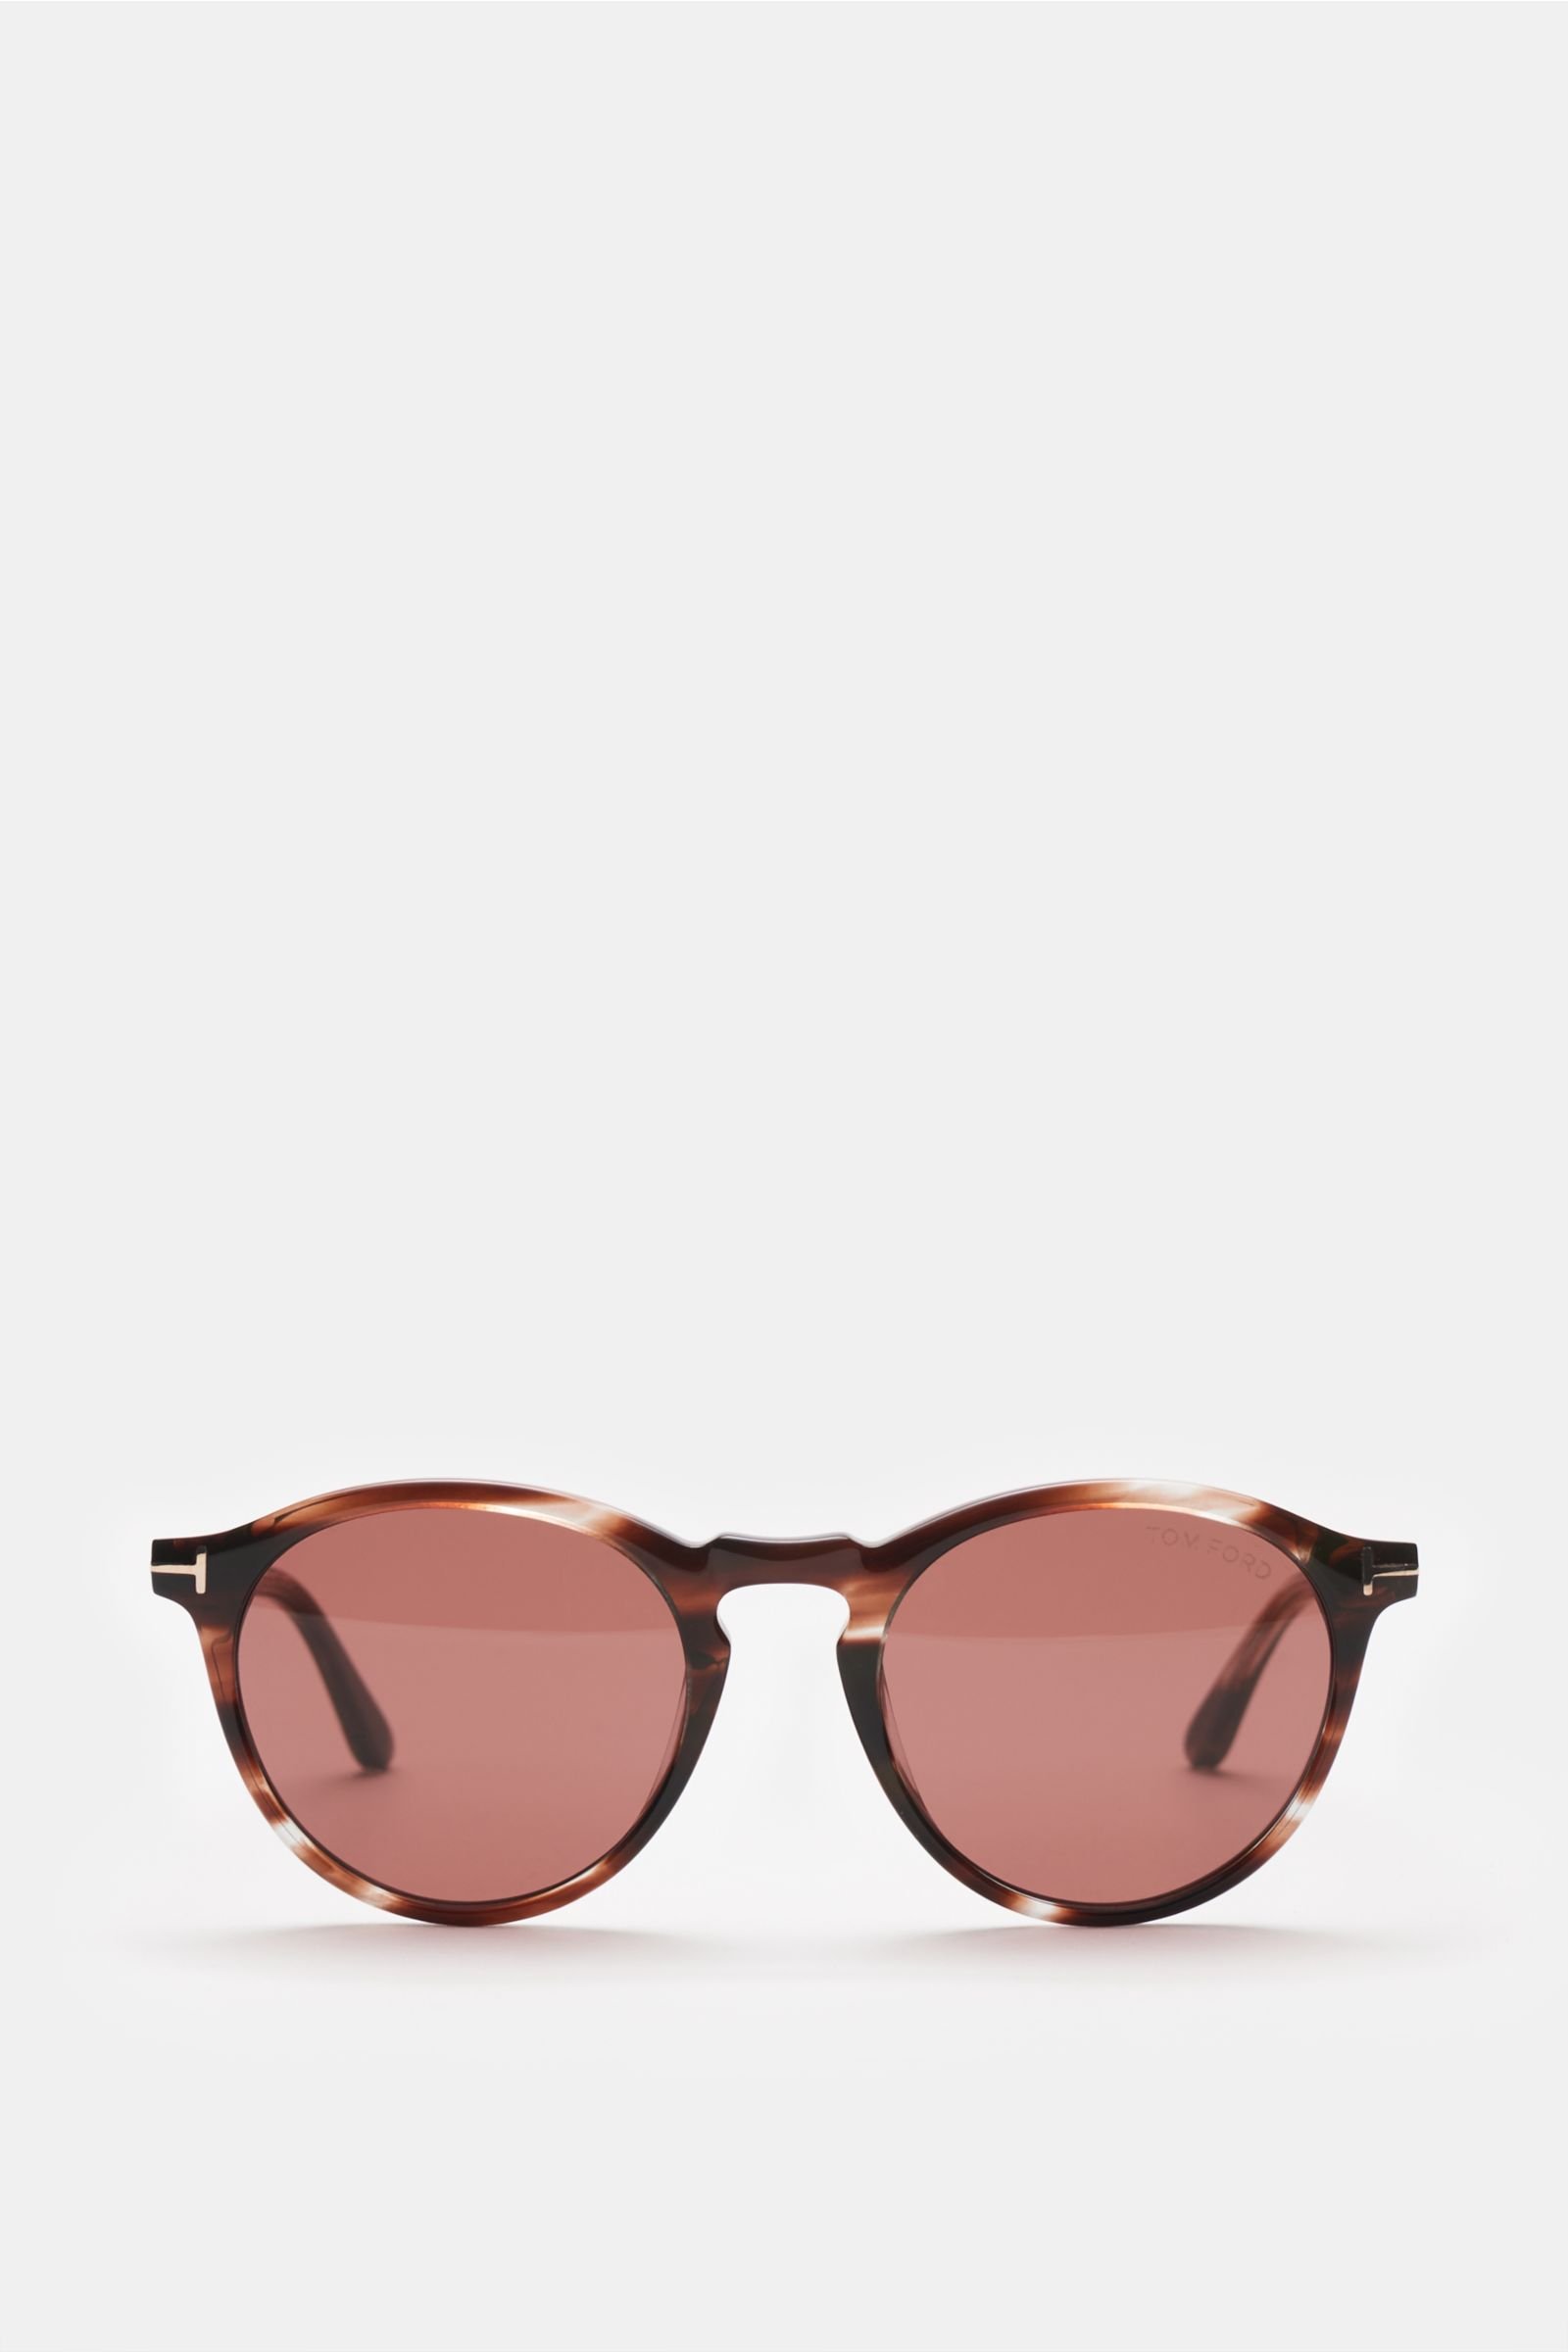 Sunglasses 'Aurele' brown patterned/red 